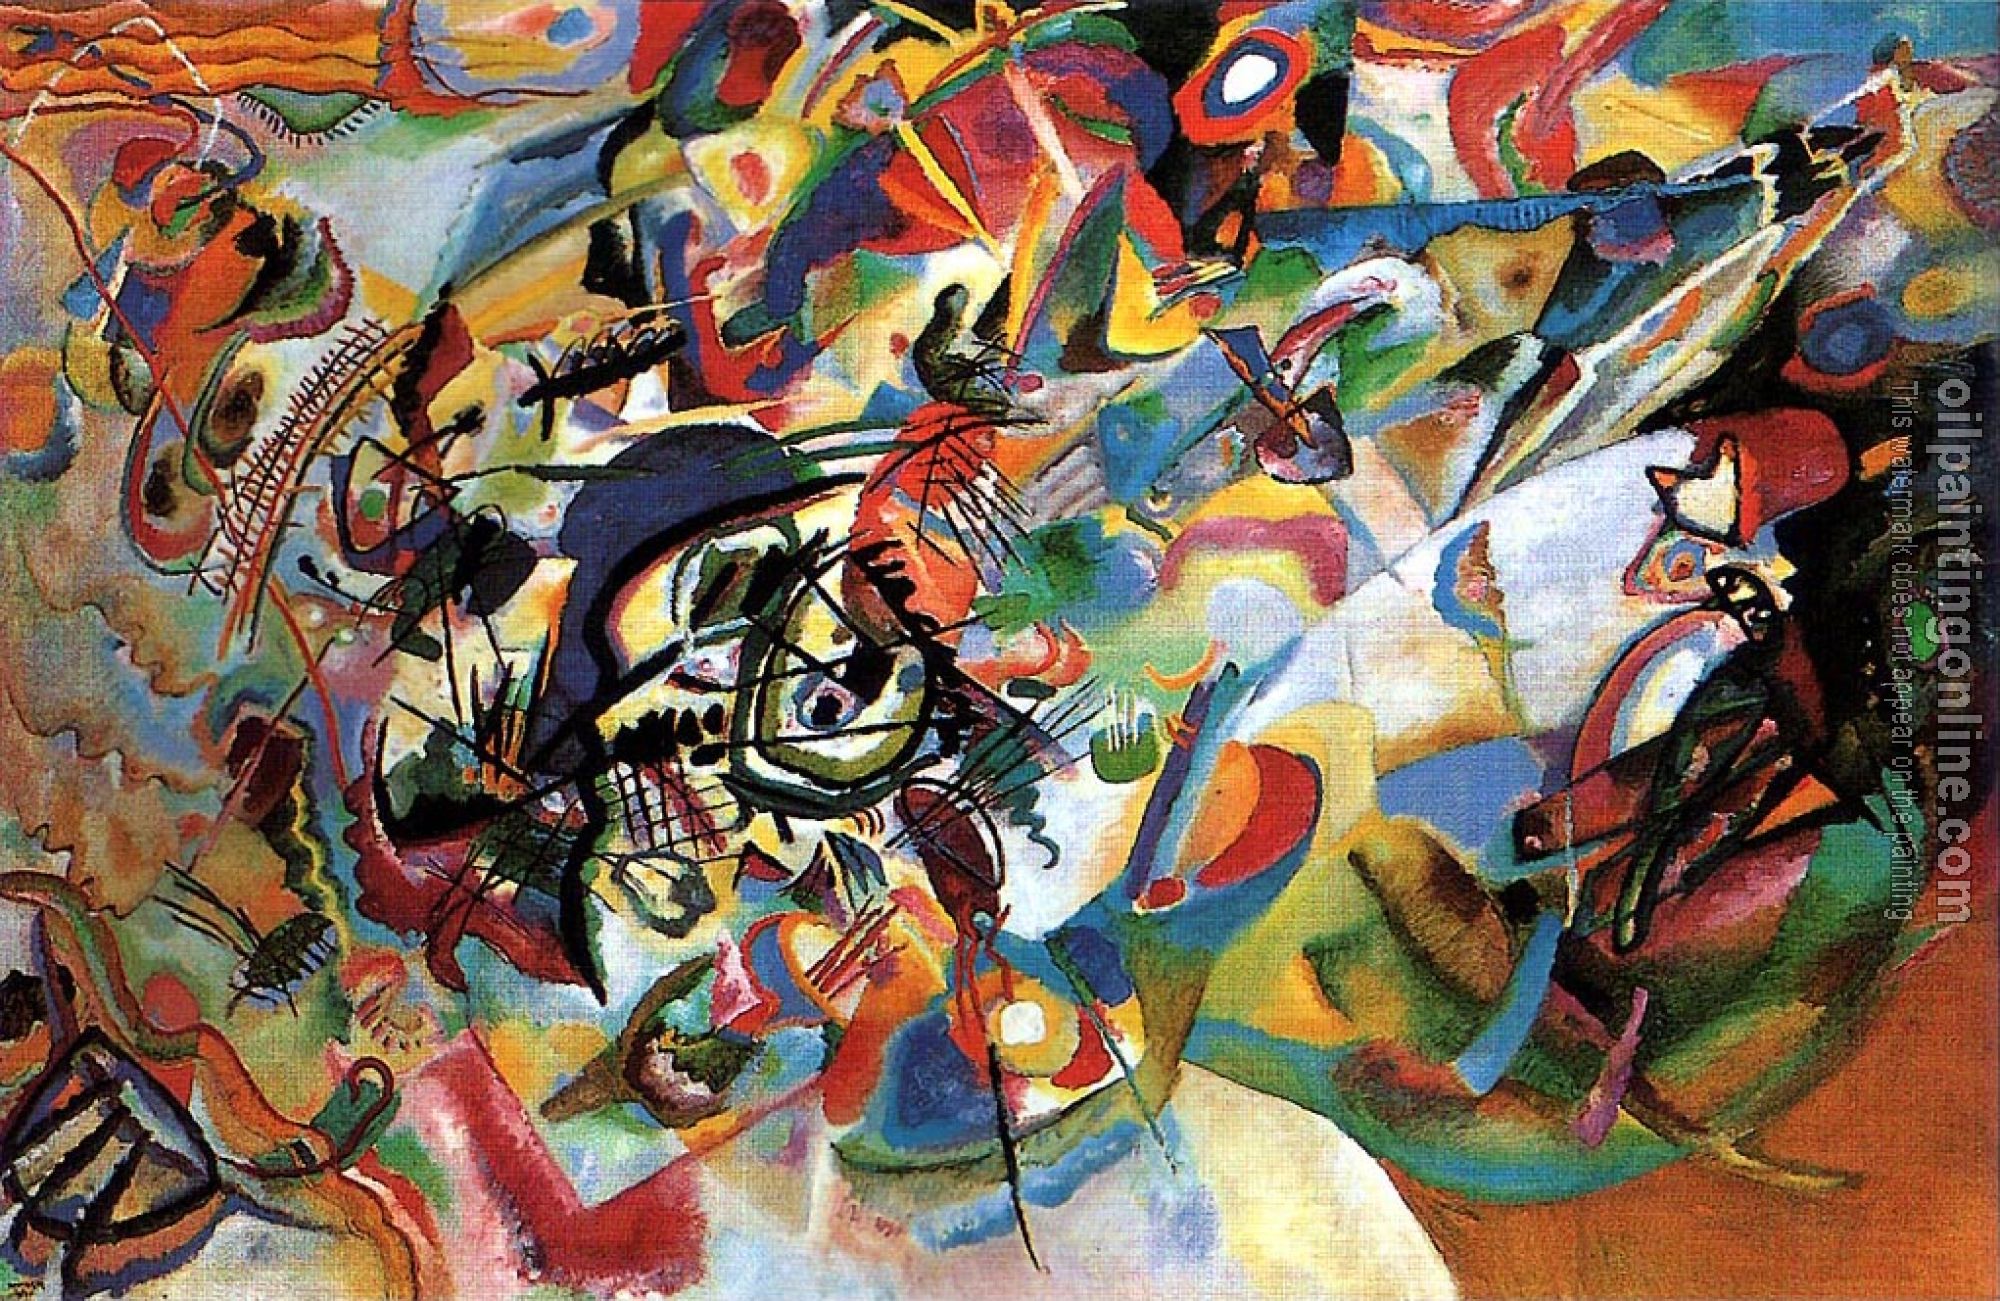 Kandinsky, Wassily - Composicion VII